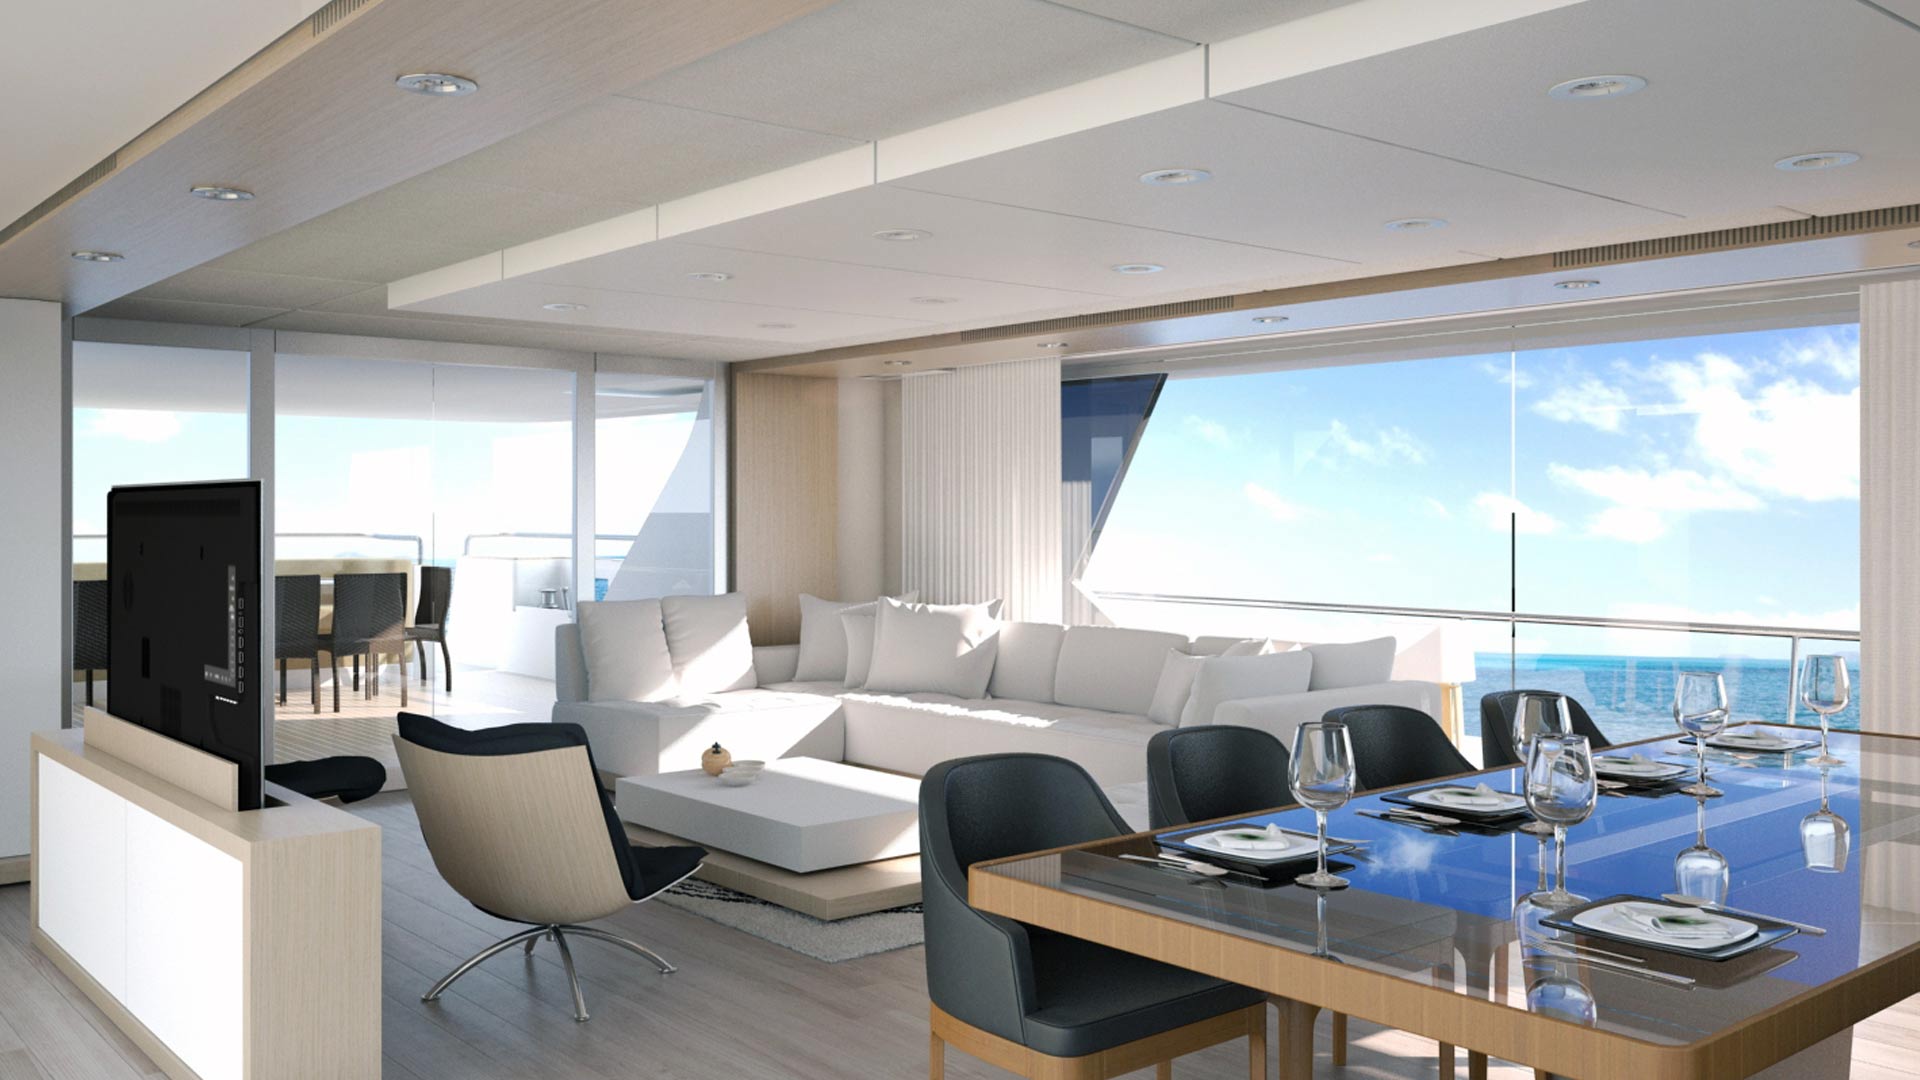 Luxi95,solar motoryacht,superyacht,luxury interiors,spacious dinette 